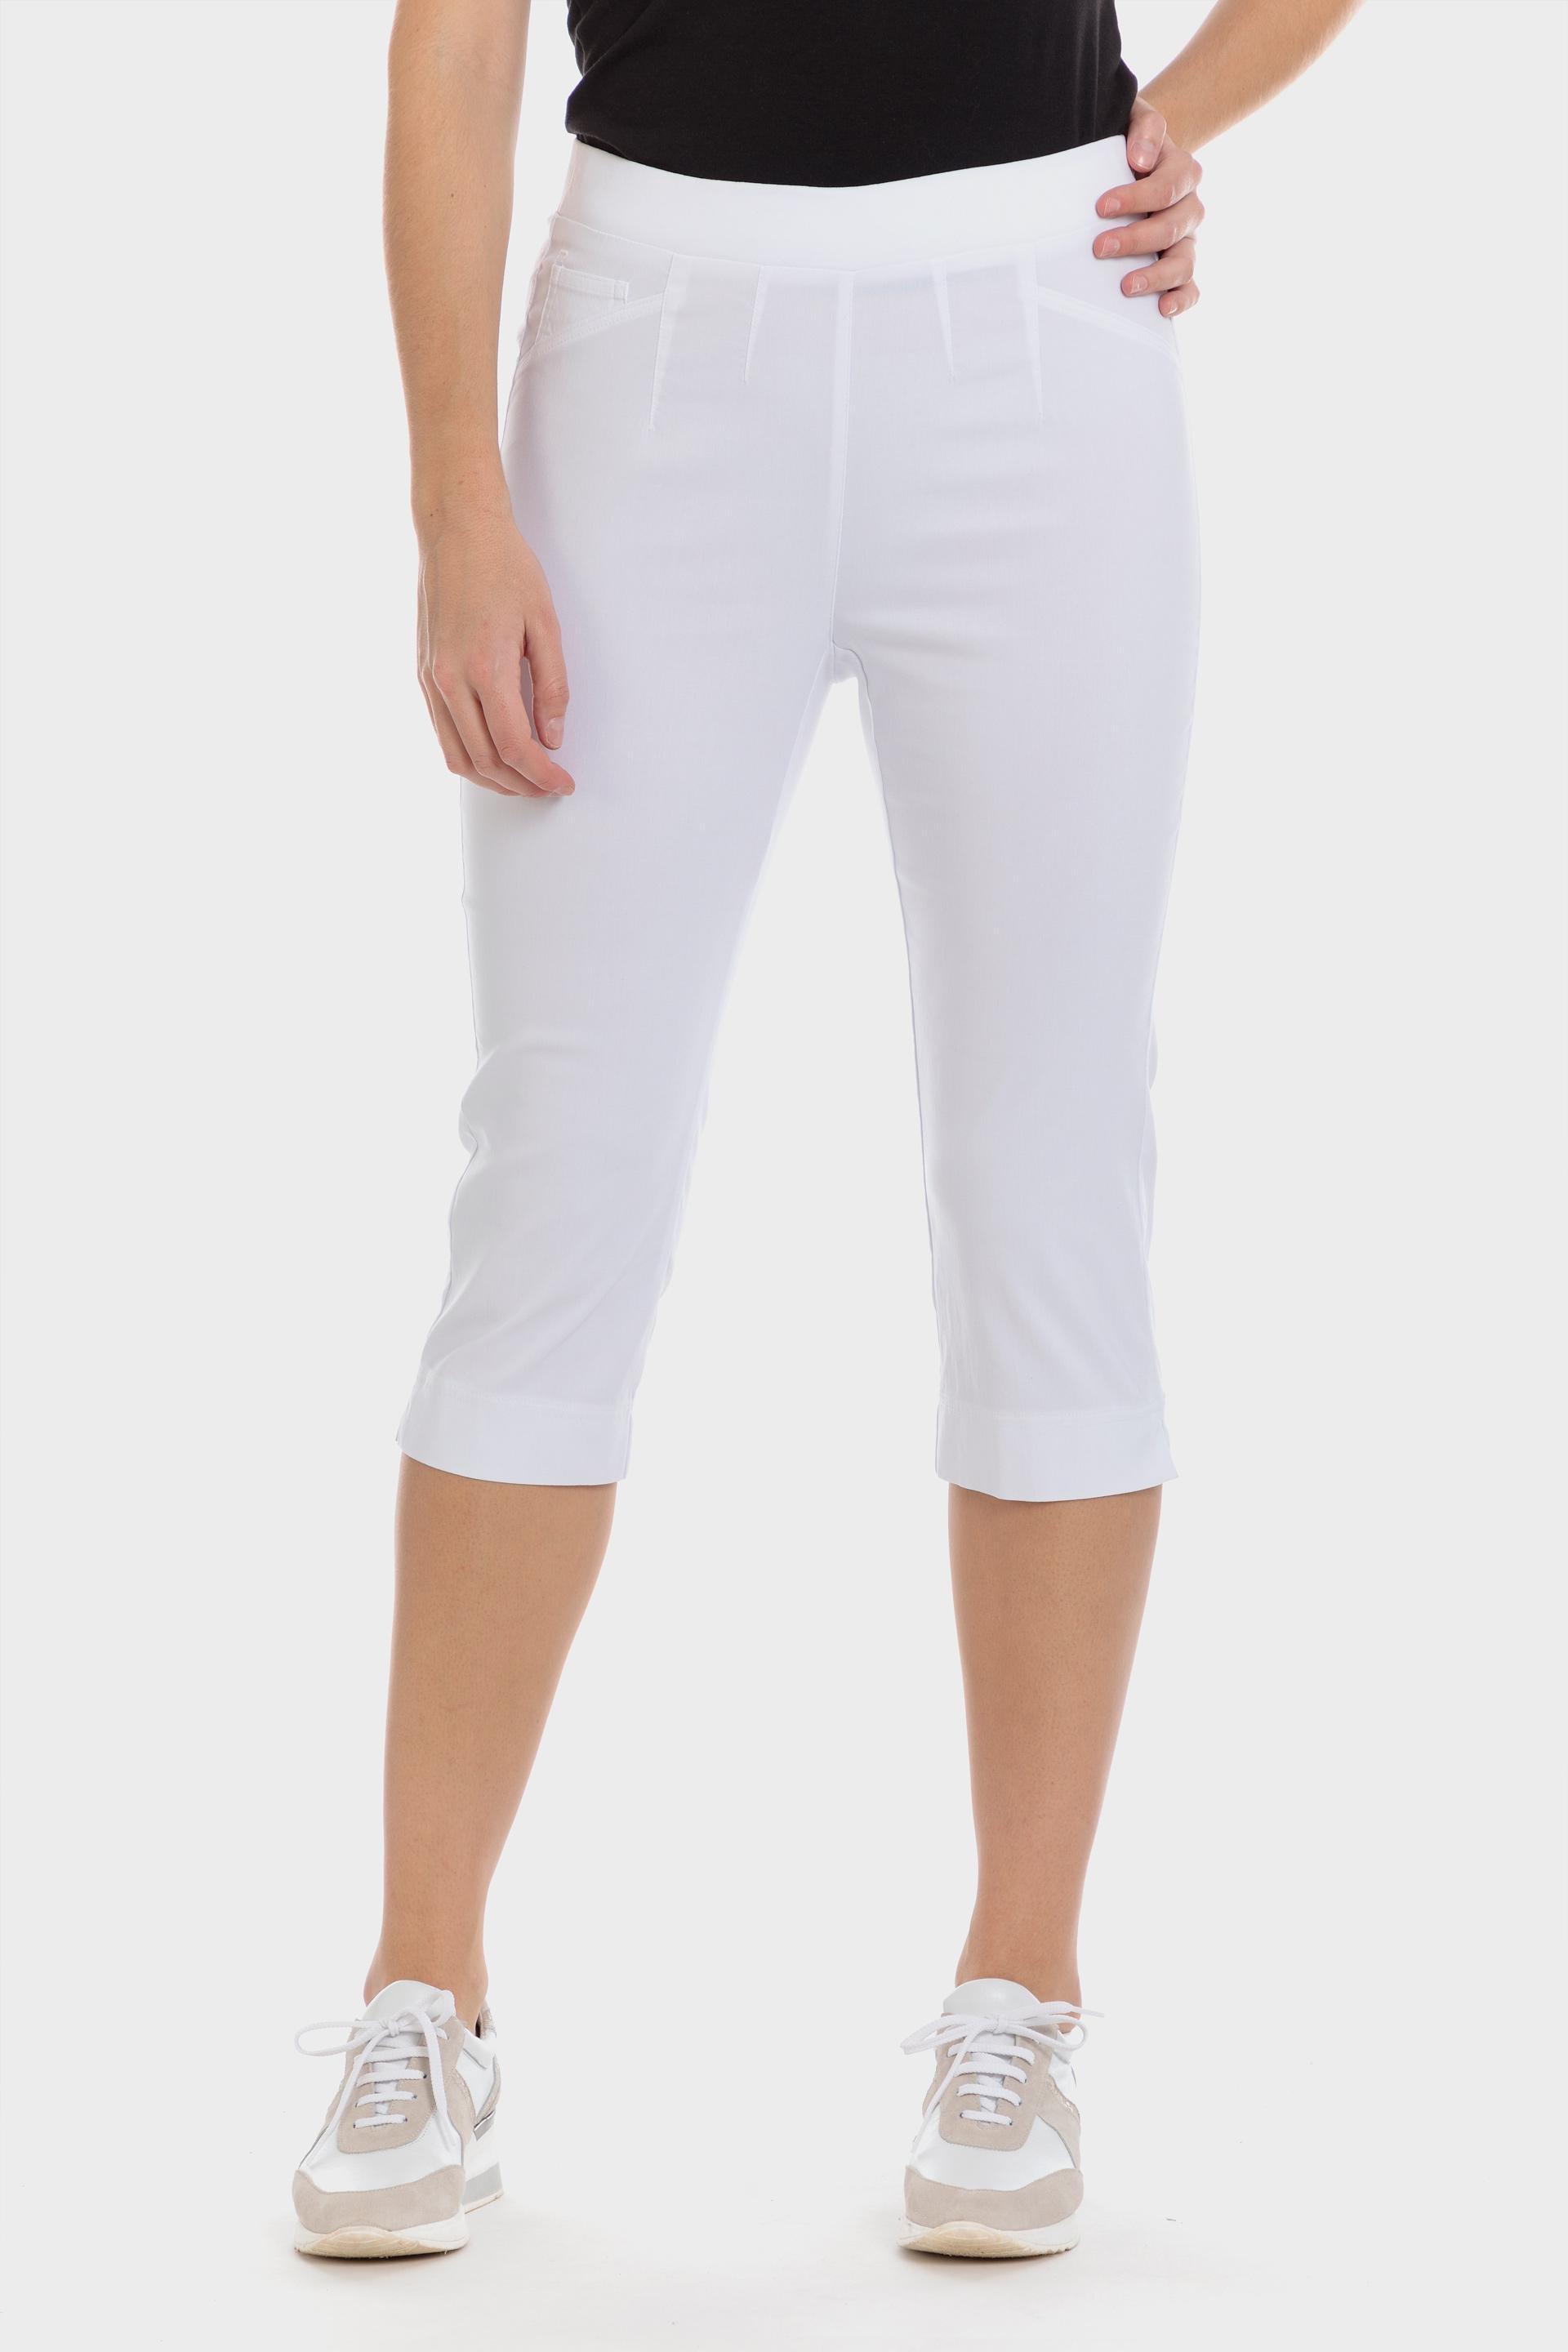 Punt Roma - White Bengaline Crop Trousers